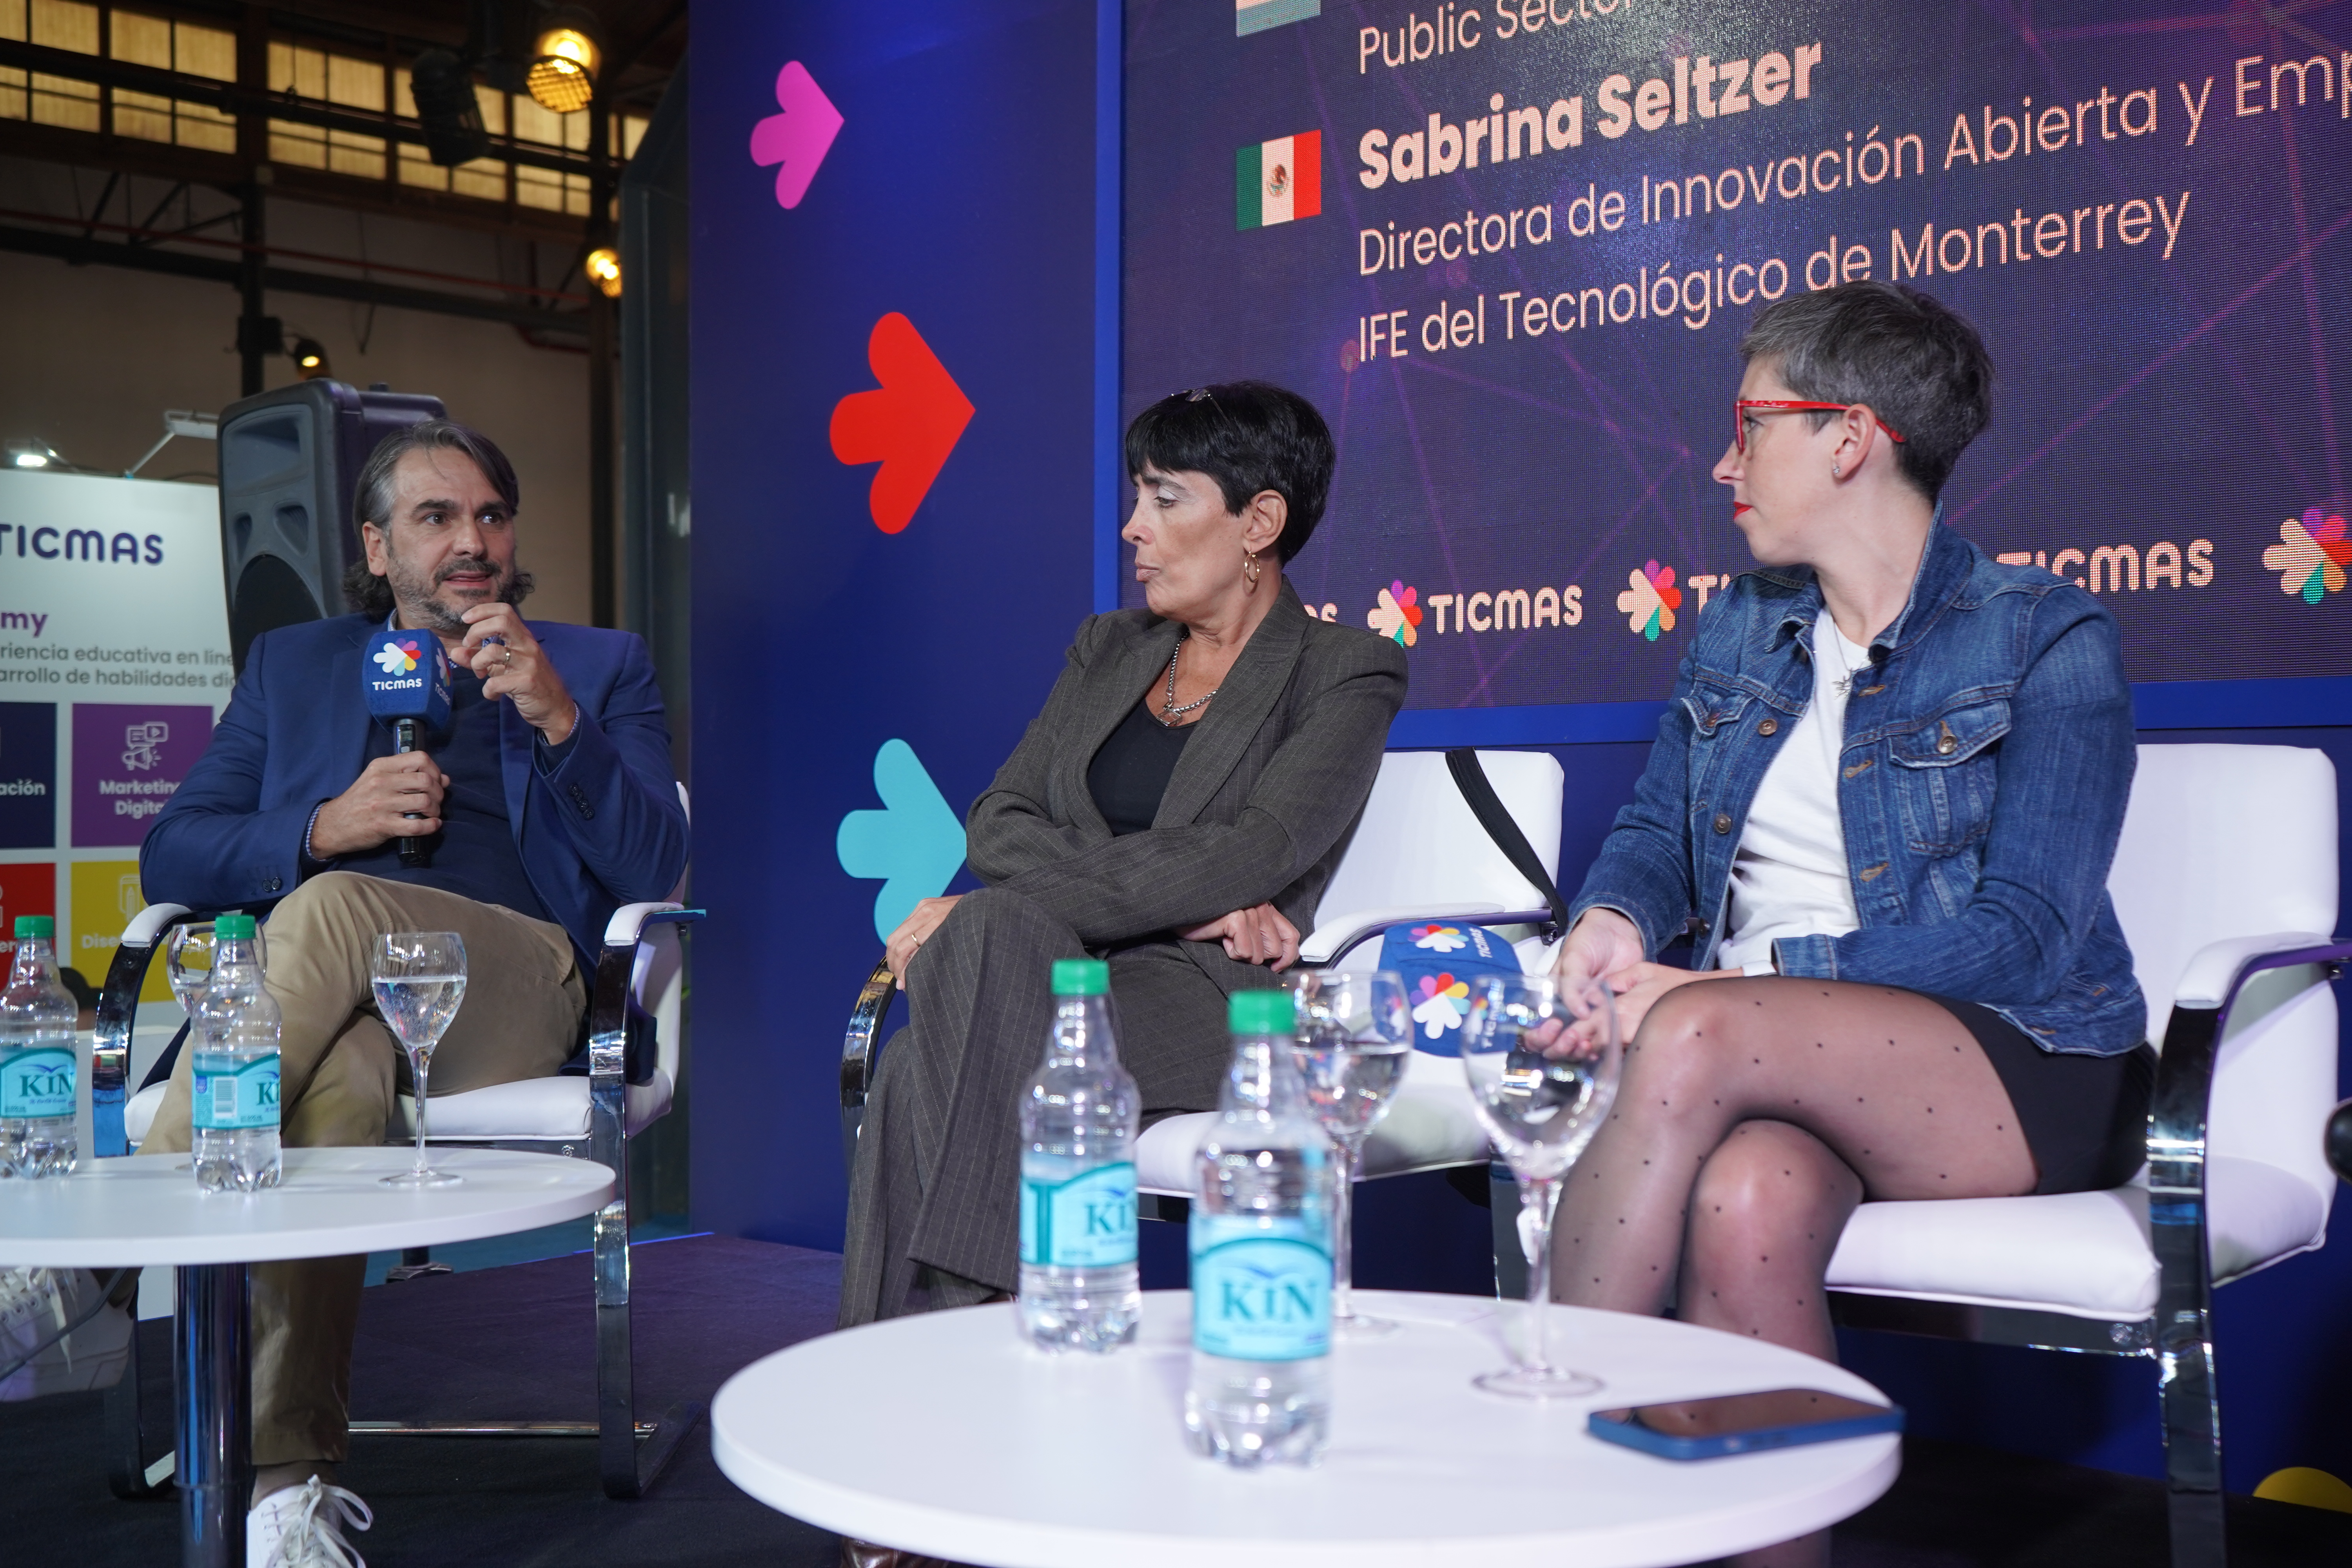 Mariano Yacovino, Laura Huarte and Sabrina Seltzer speak in a panel moderated by Eduardo Feinmann (Photo: Agustín Brashich)